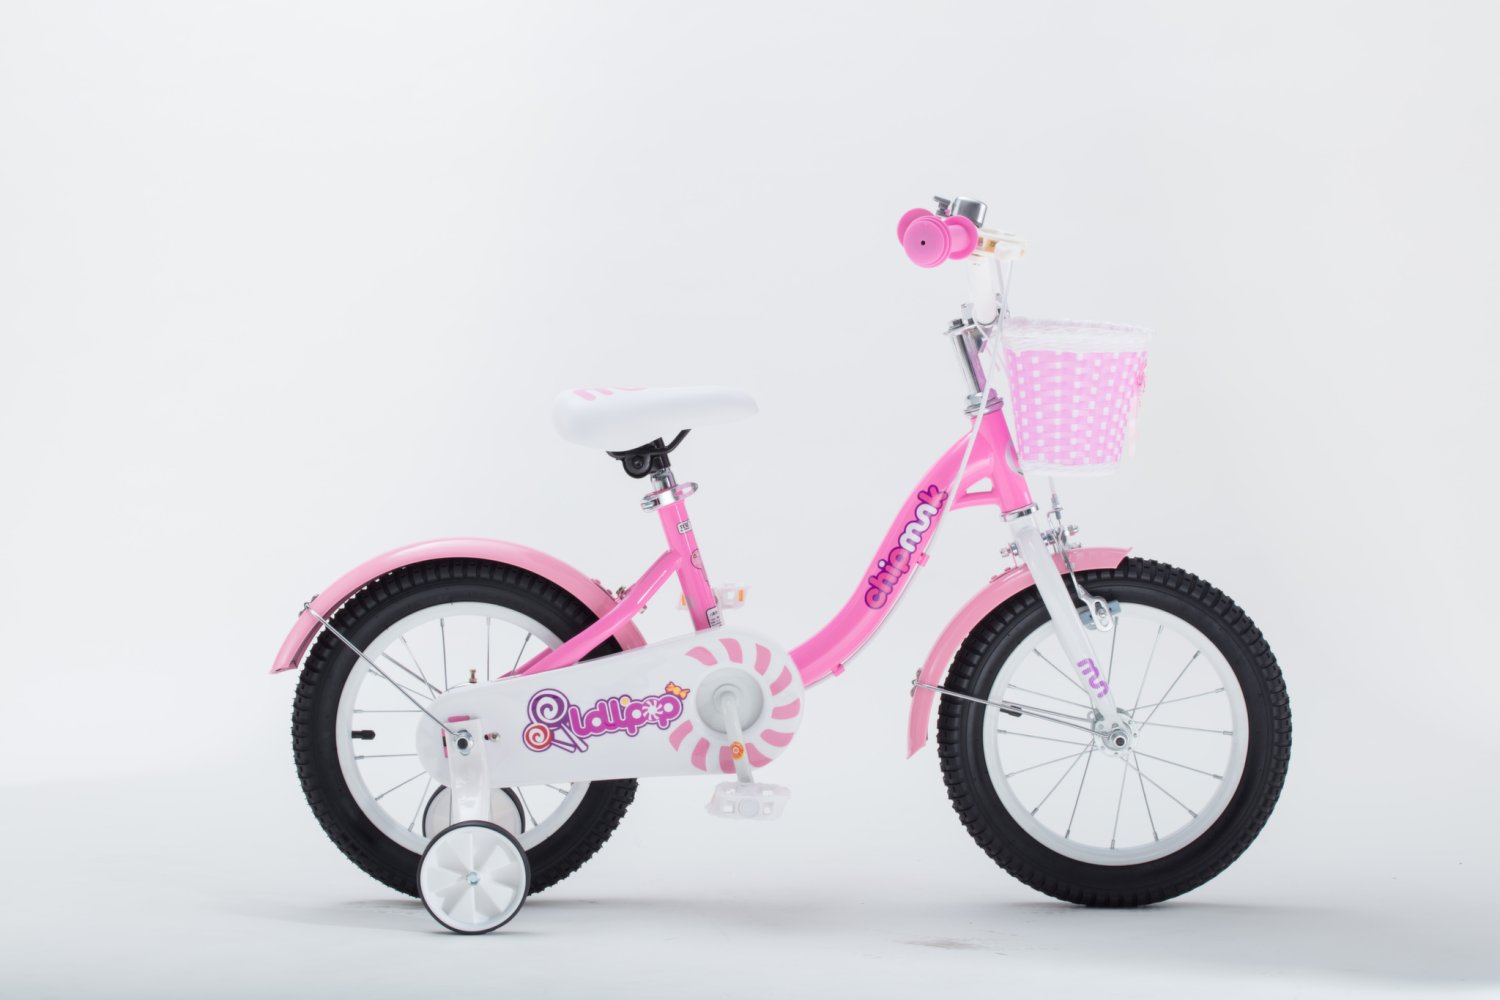 Royal Baby Детский велосипед Royal Baby Chipmunk MМ 16  2021